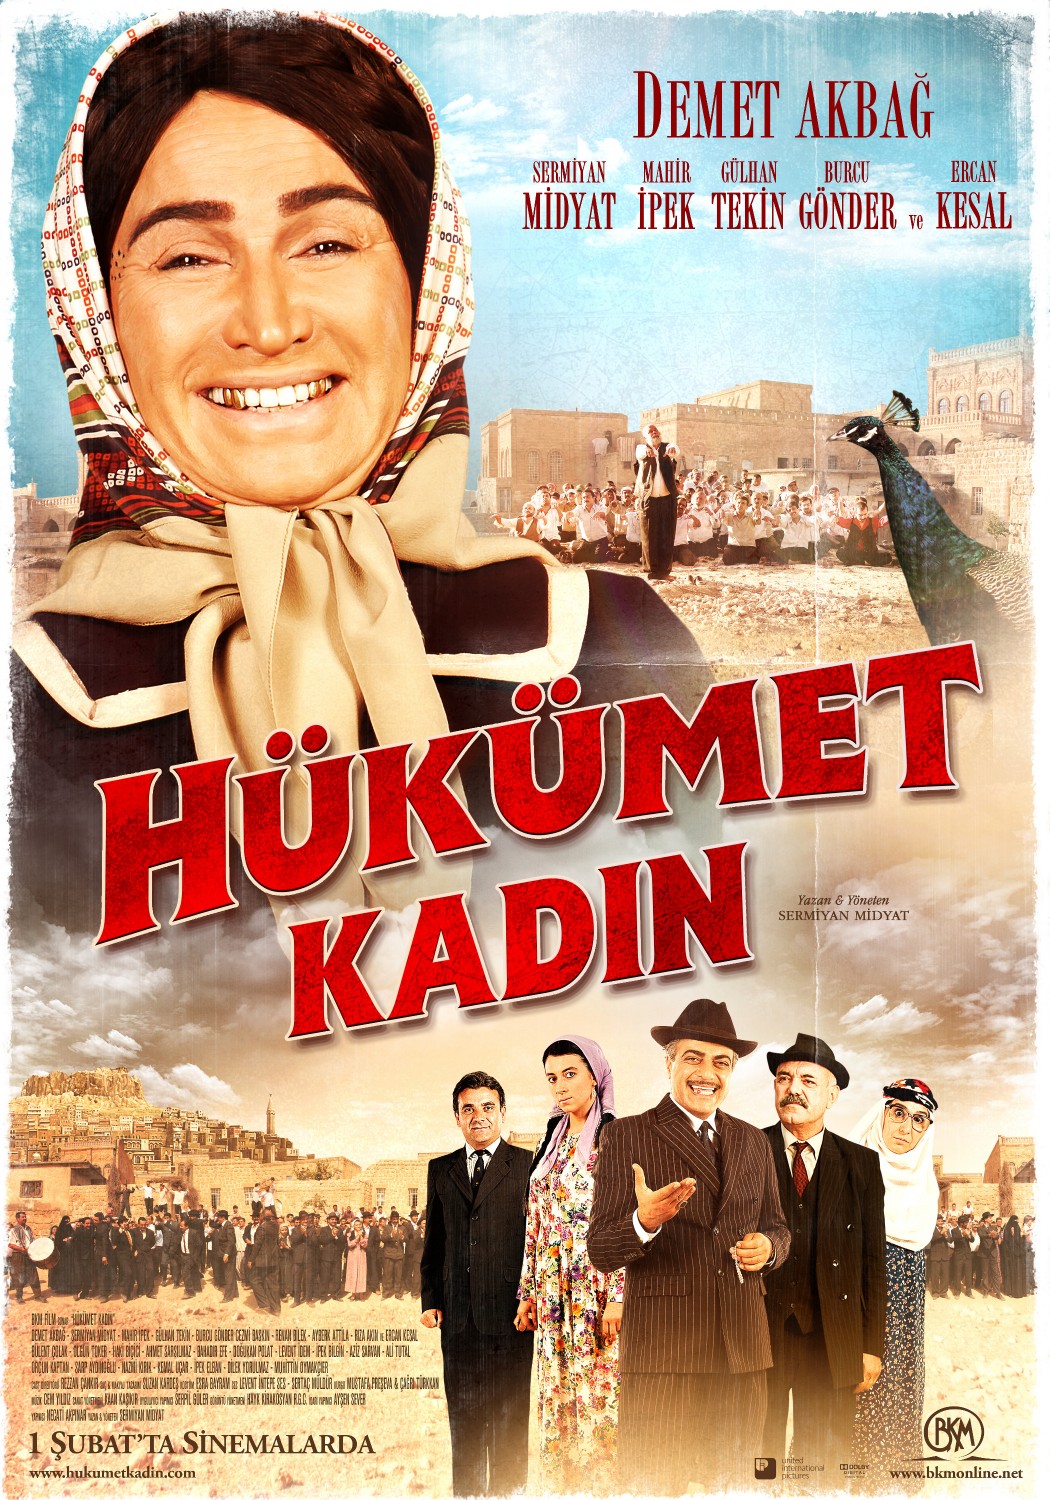 Extra Large Movie Poster Image for Hükümet kadin (#6 of 6)